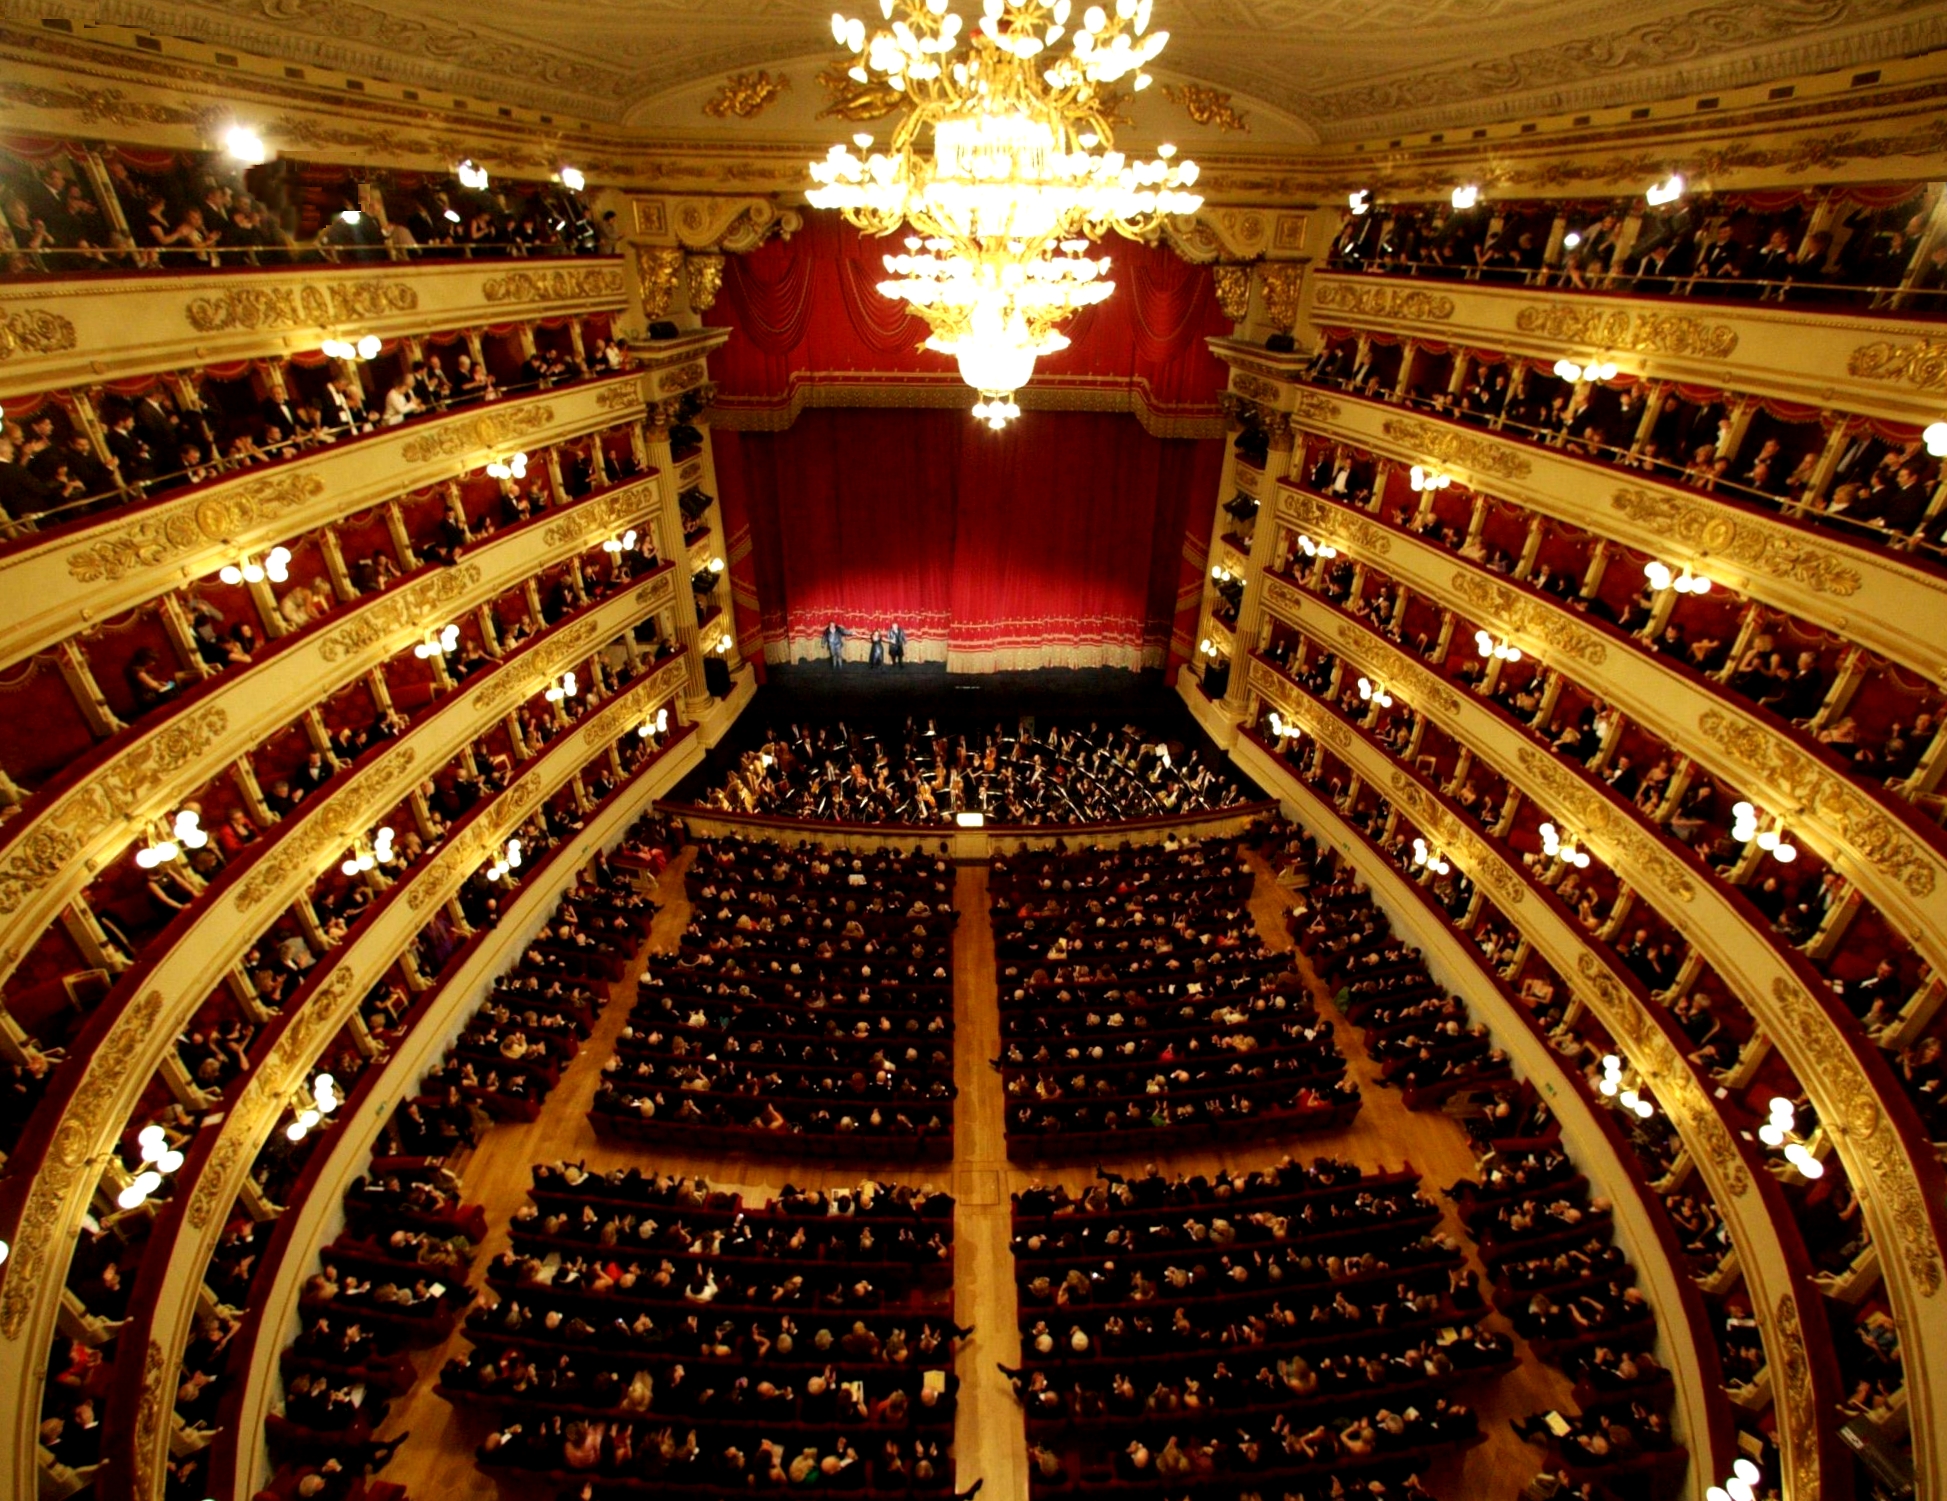 La Scala inside view